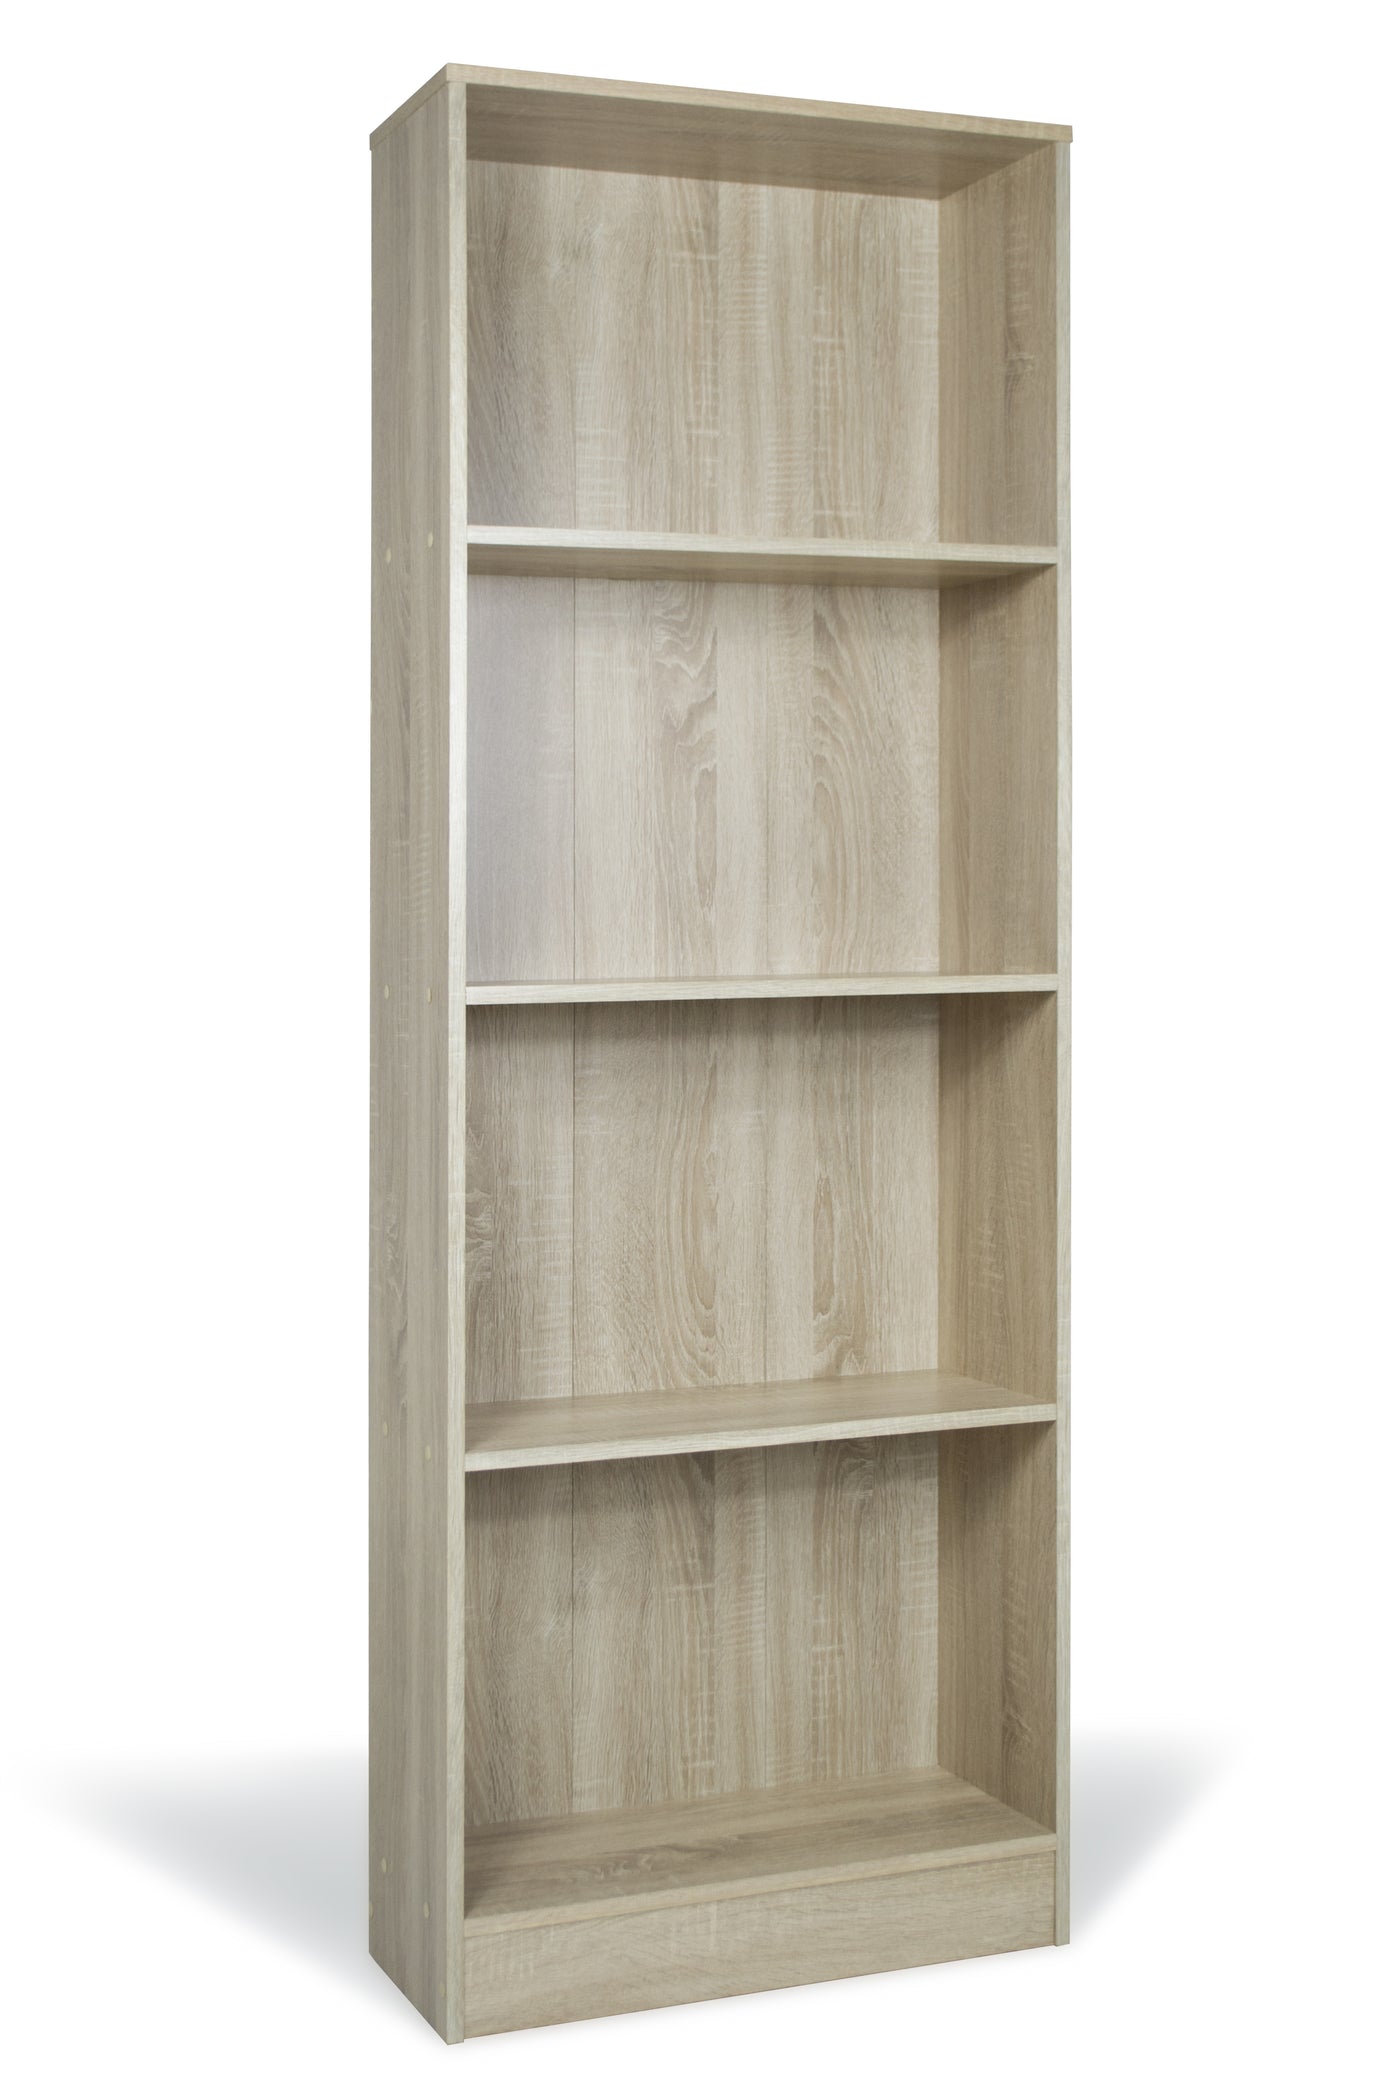 ATHENA oak bookcase